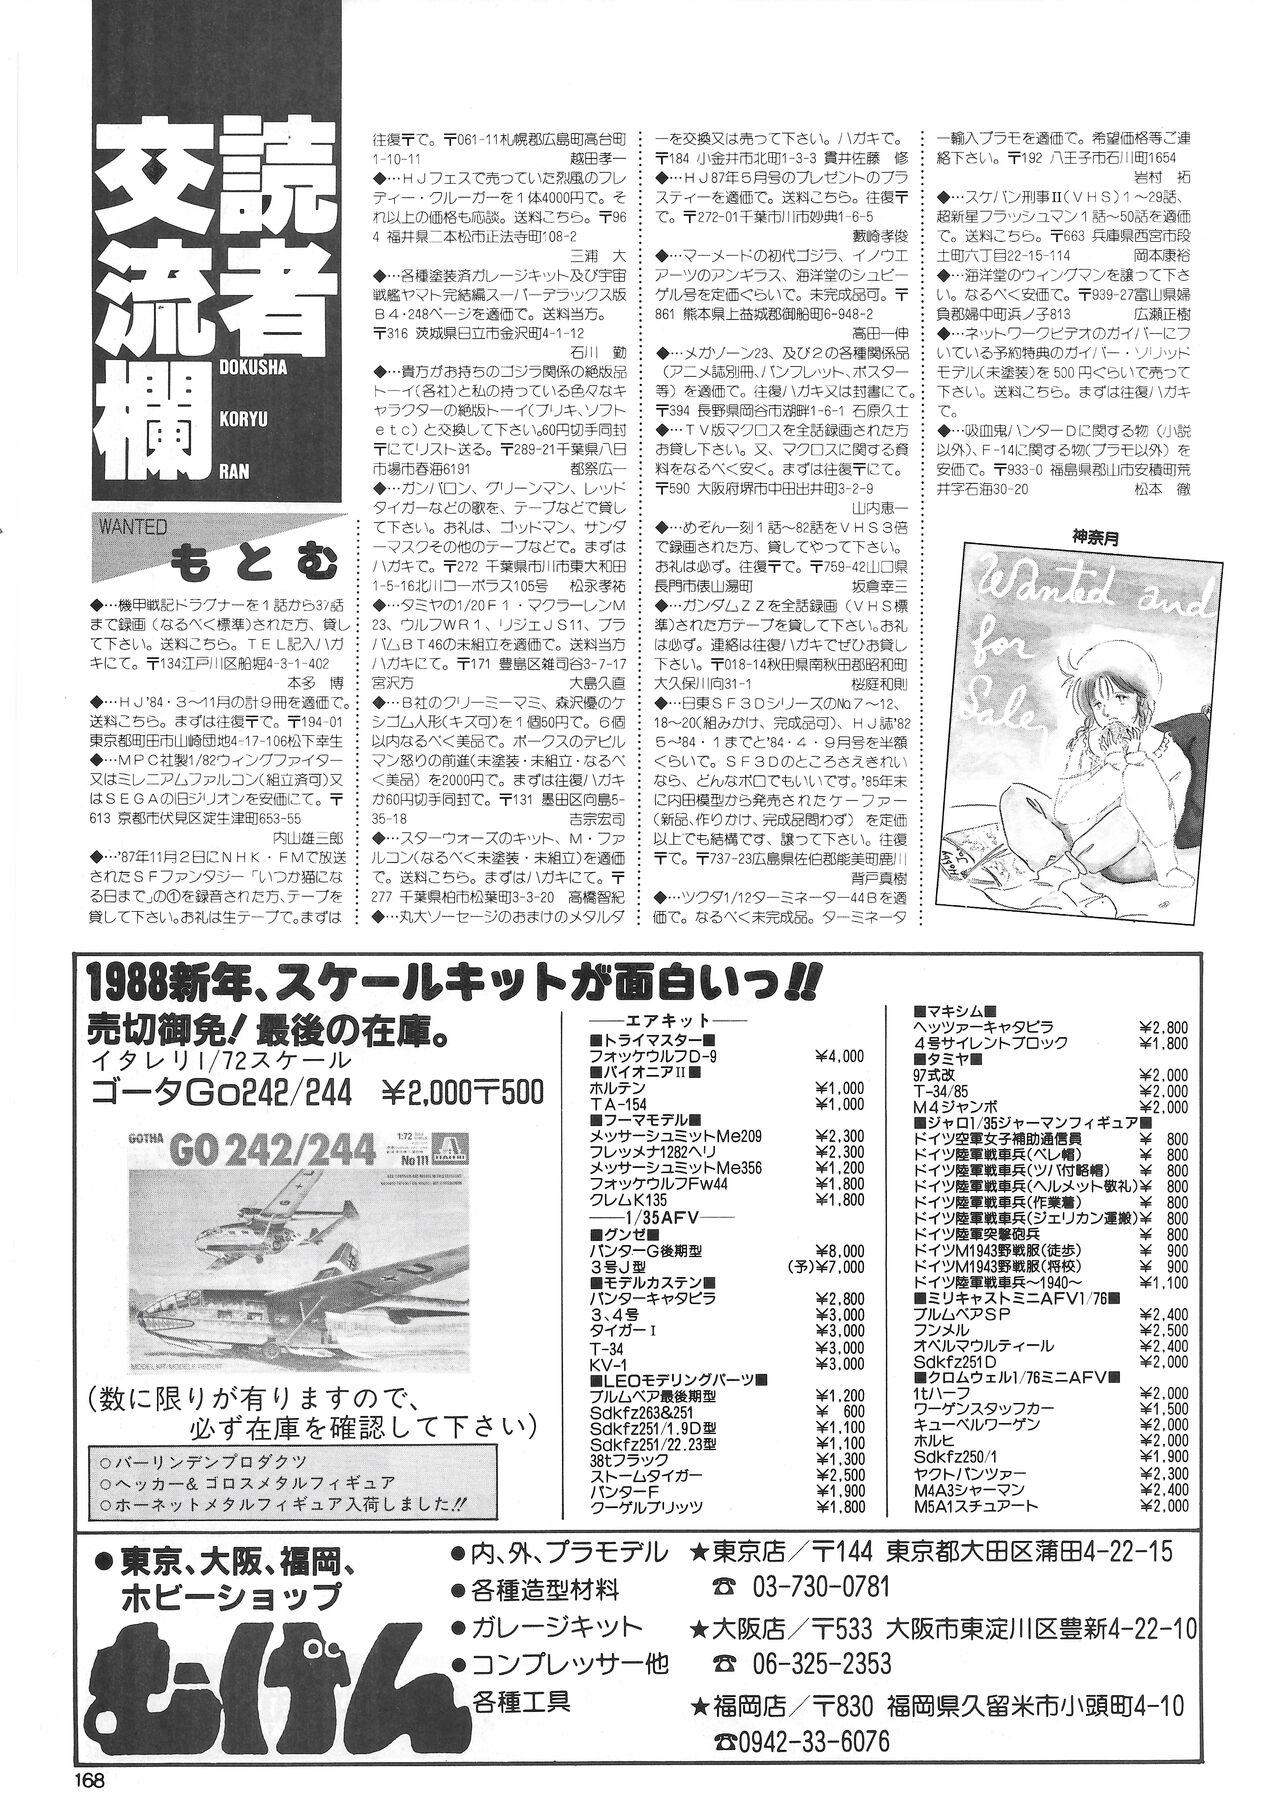 Hobby Japan Magazine 1988 Issue No.224 167